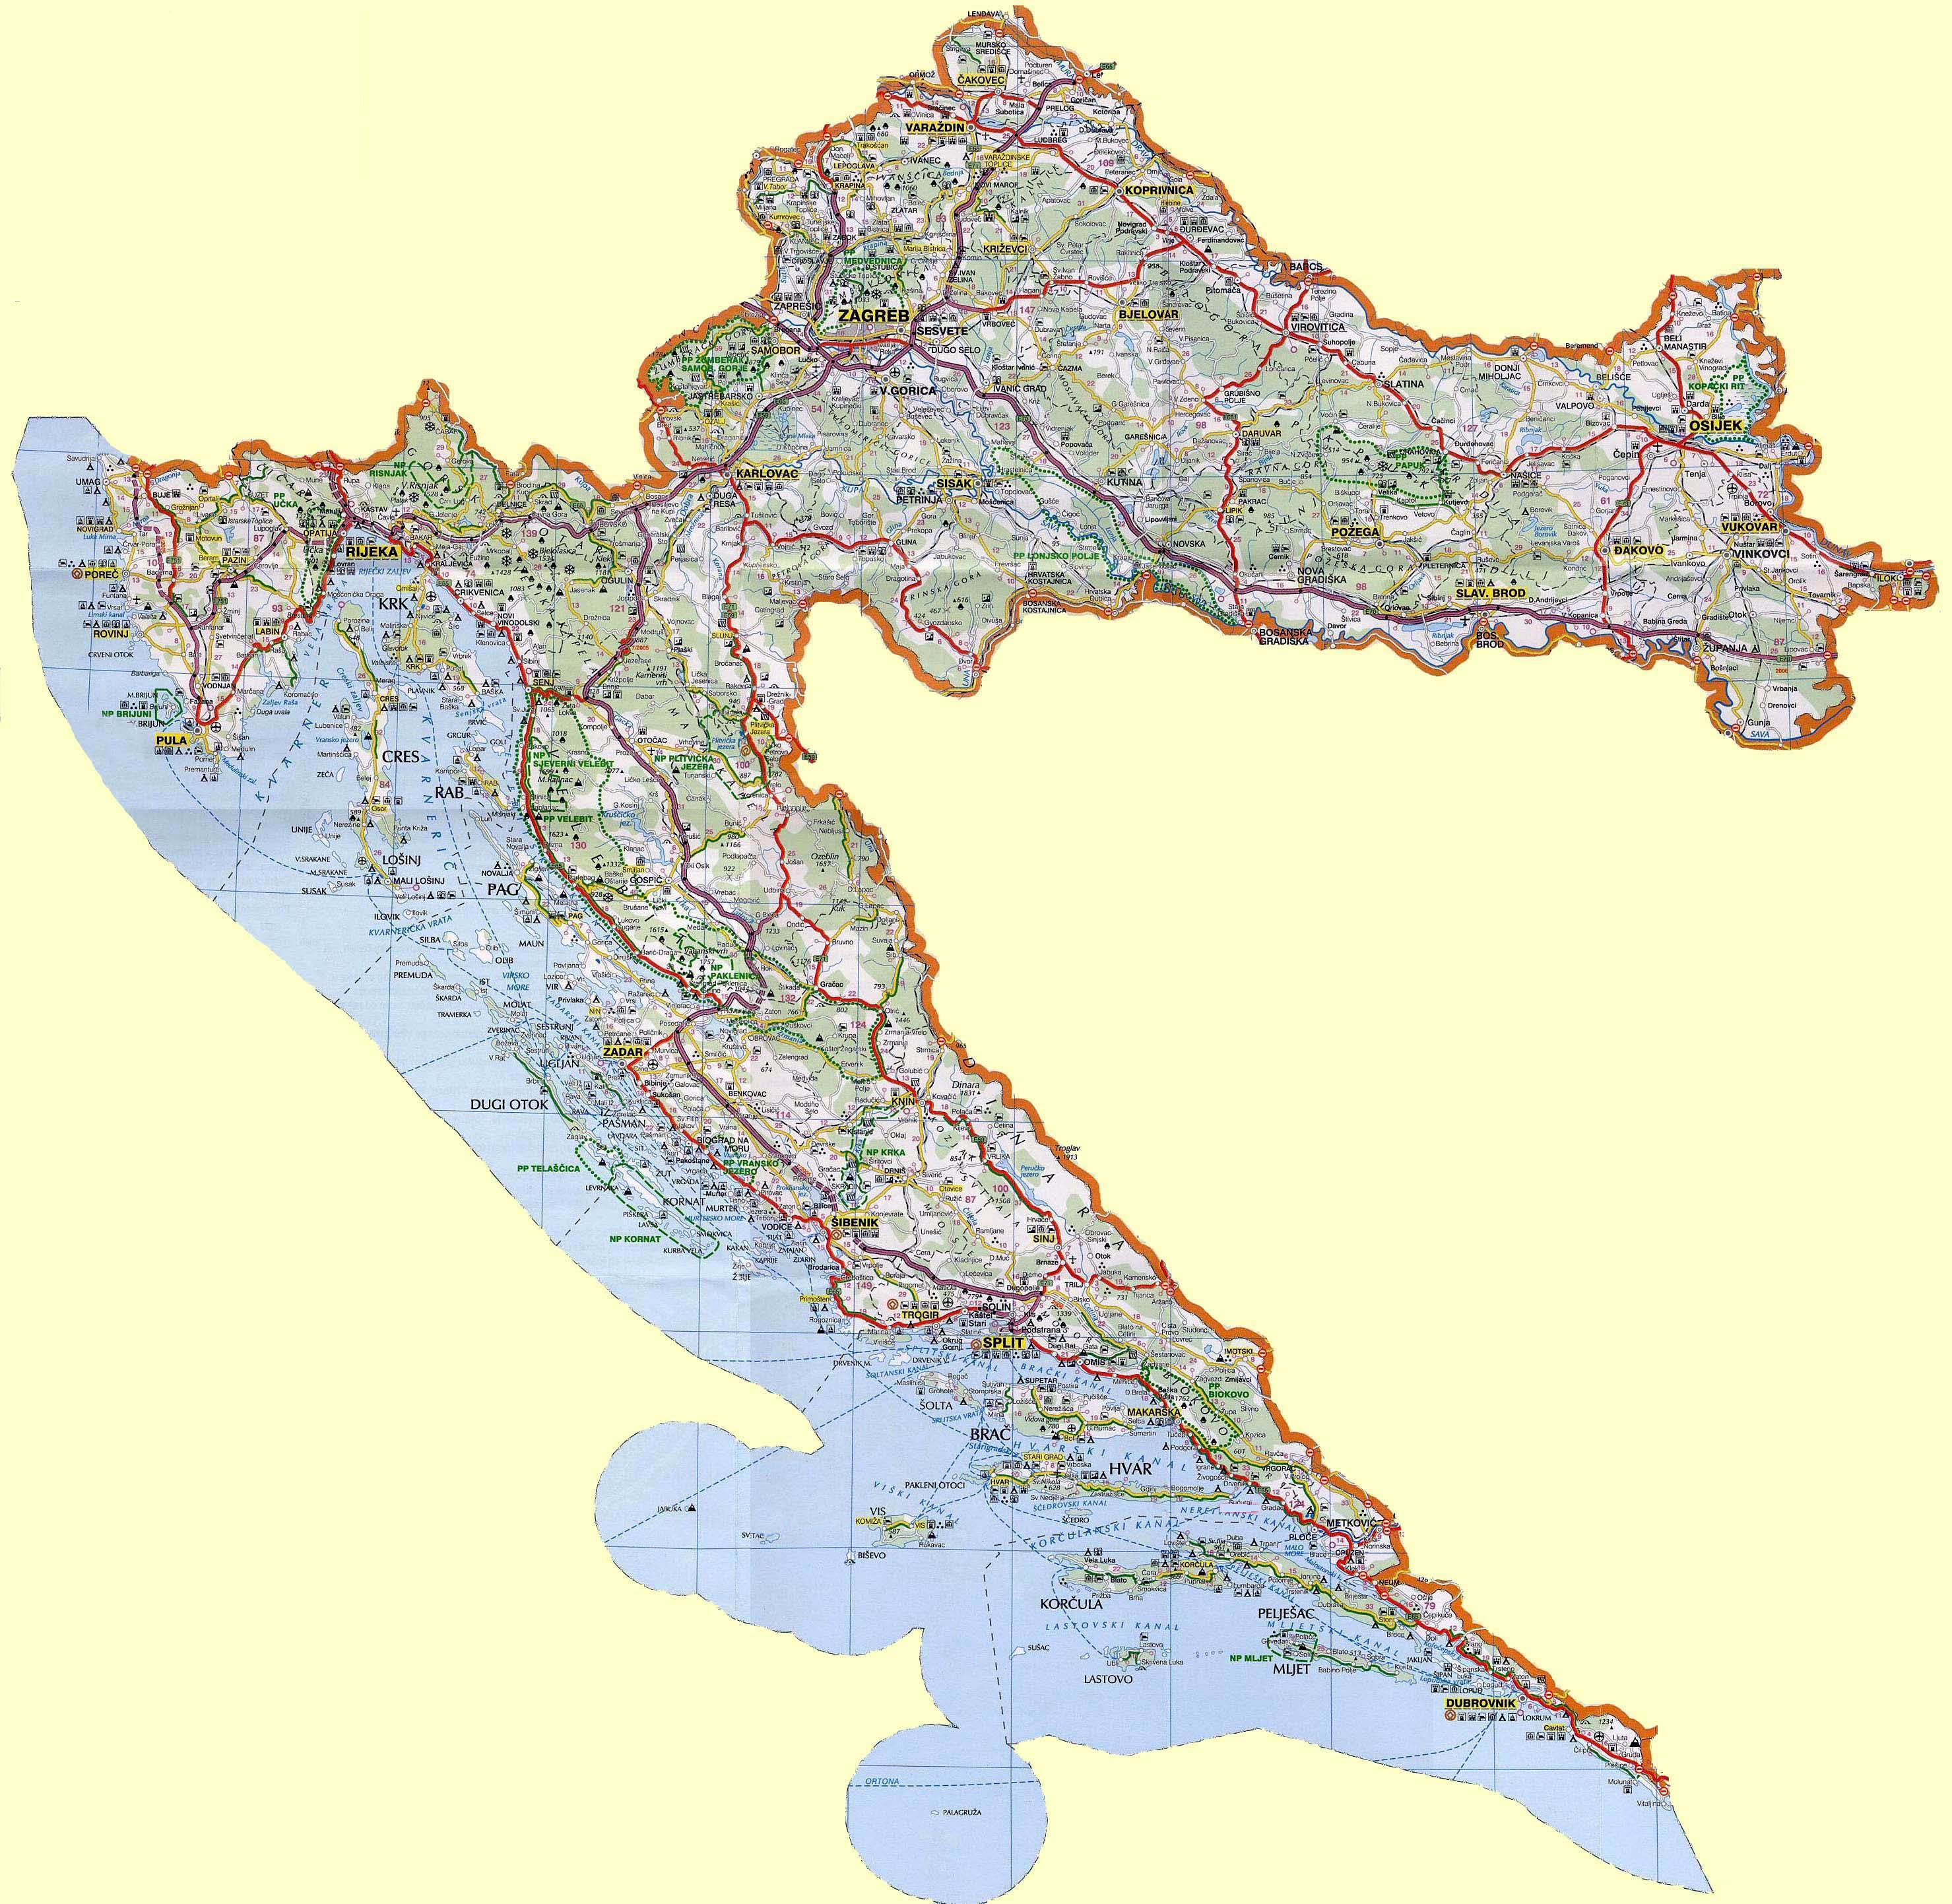 3d karta hrvatske download Croatia Maps | Printable Maps of Croatia for Download 3d karta hrvatske download